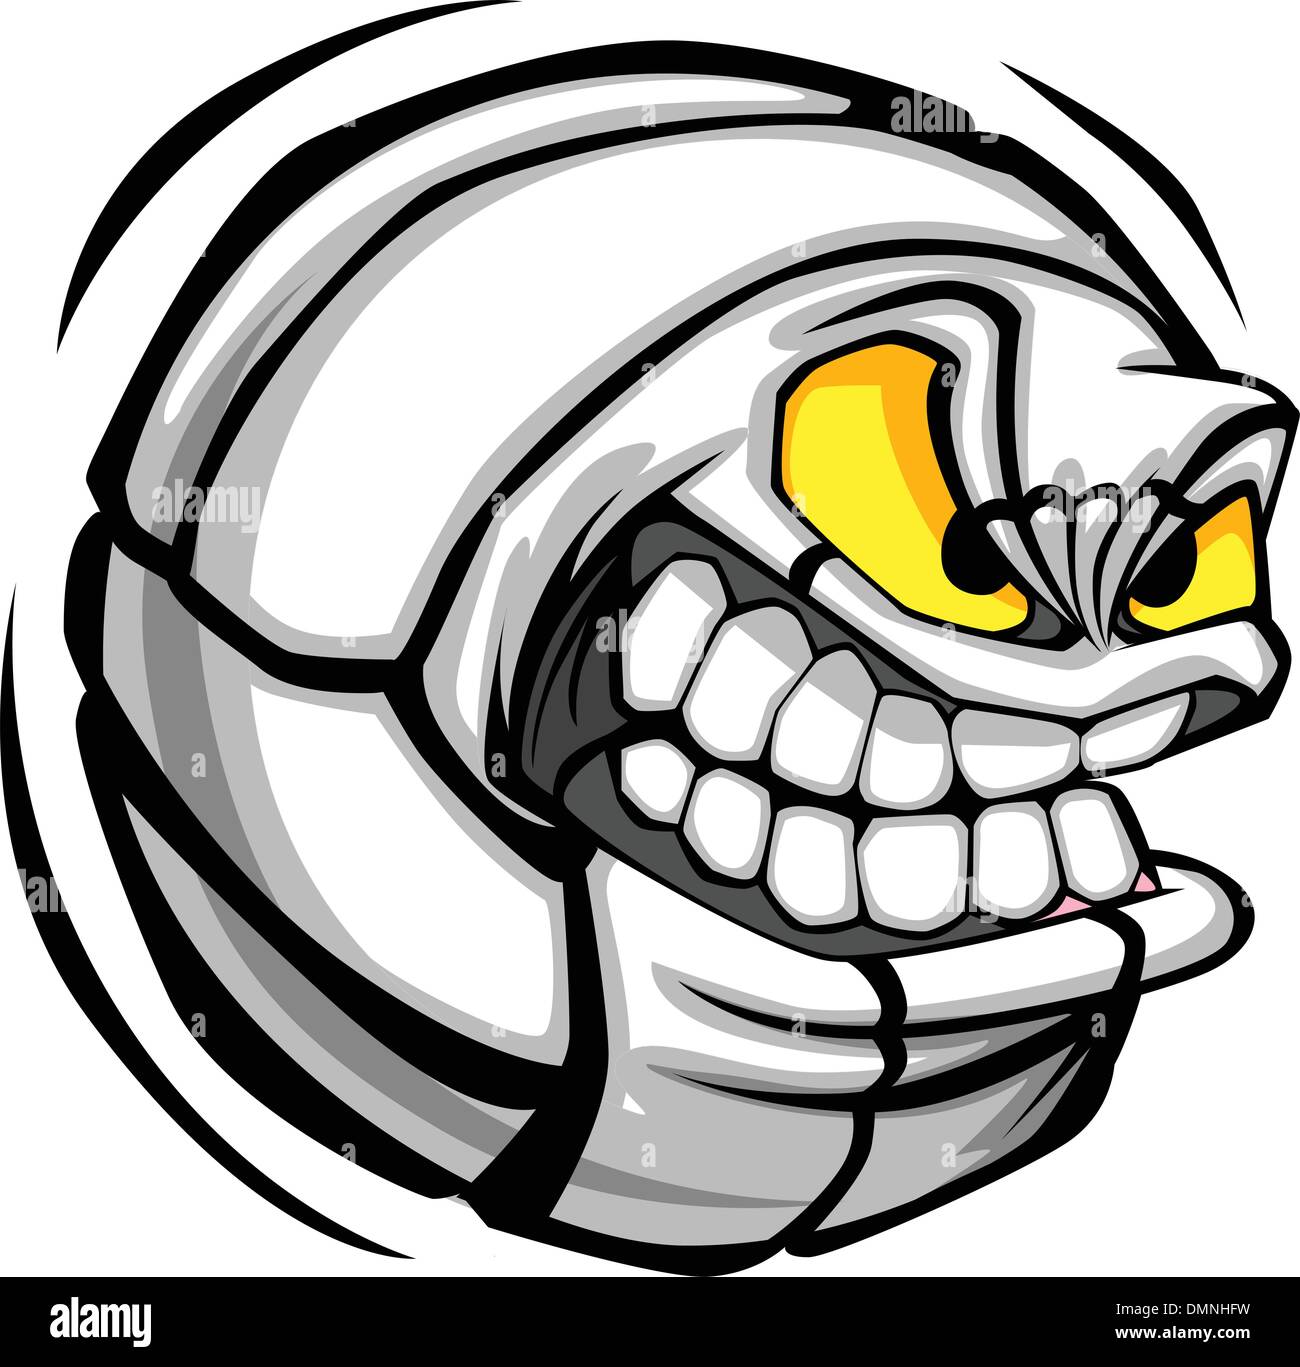 Volleyball-Ball-Gesicht-Cartoon-Vektor-Bild Stock Vektor